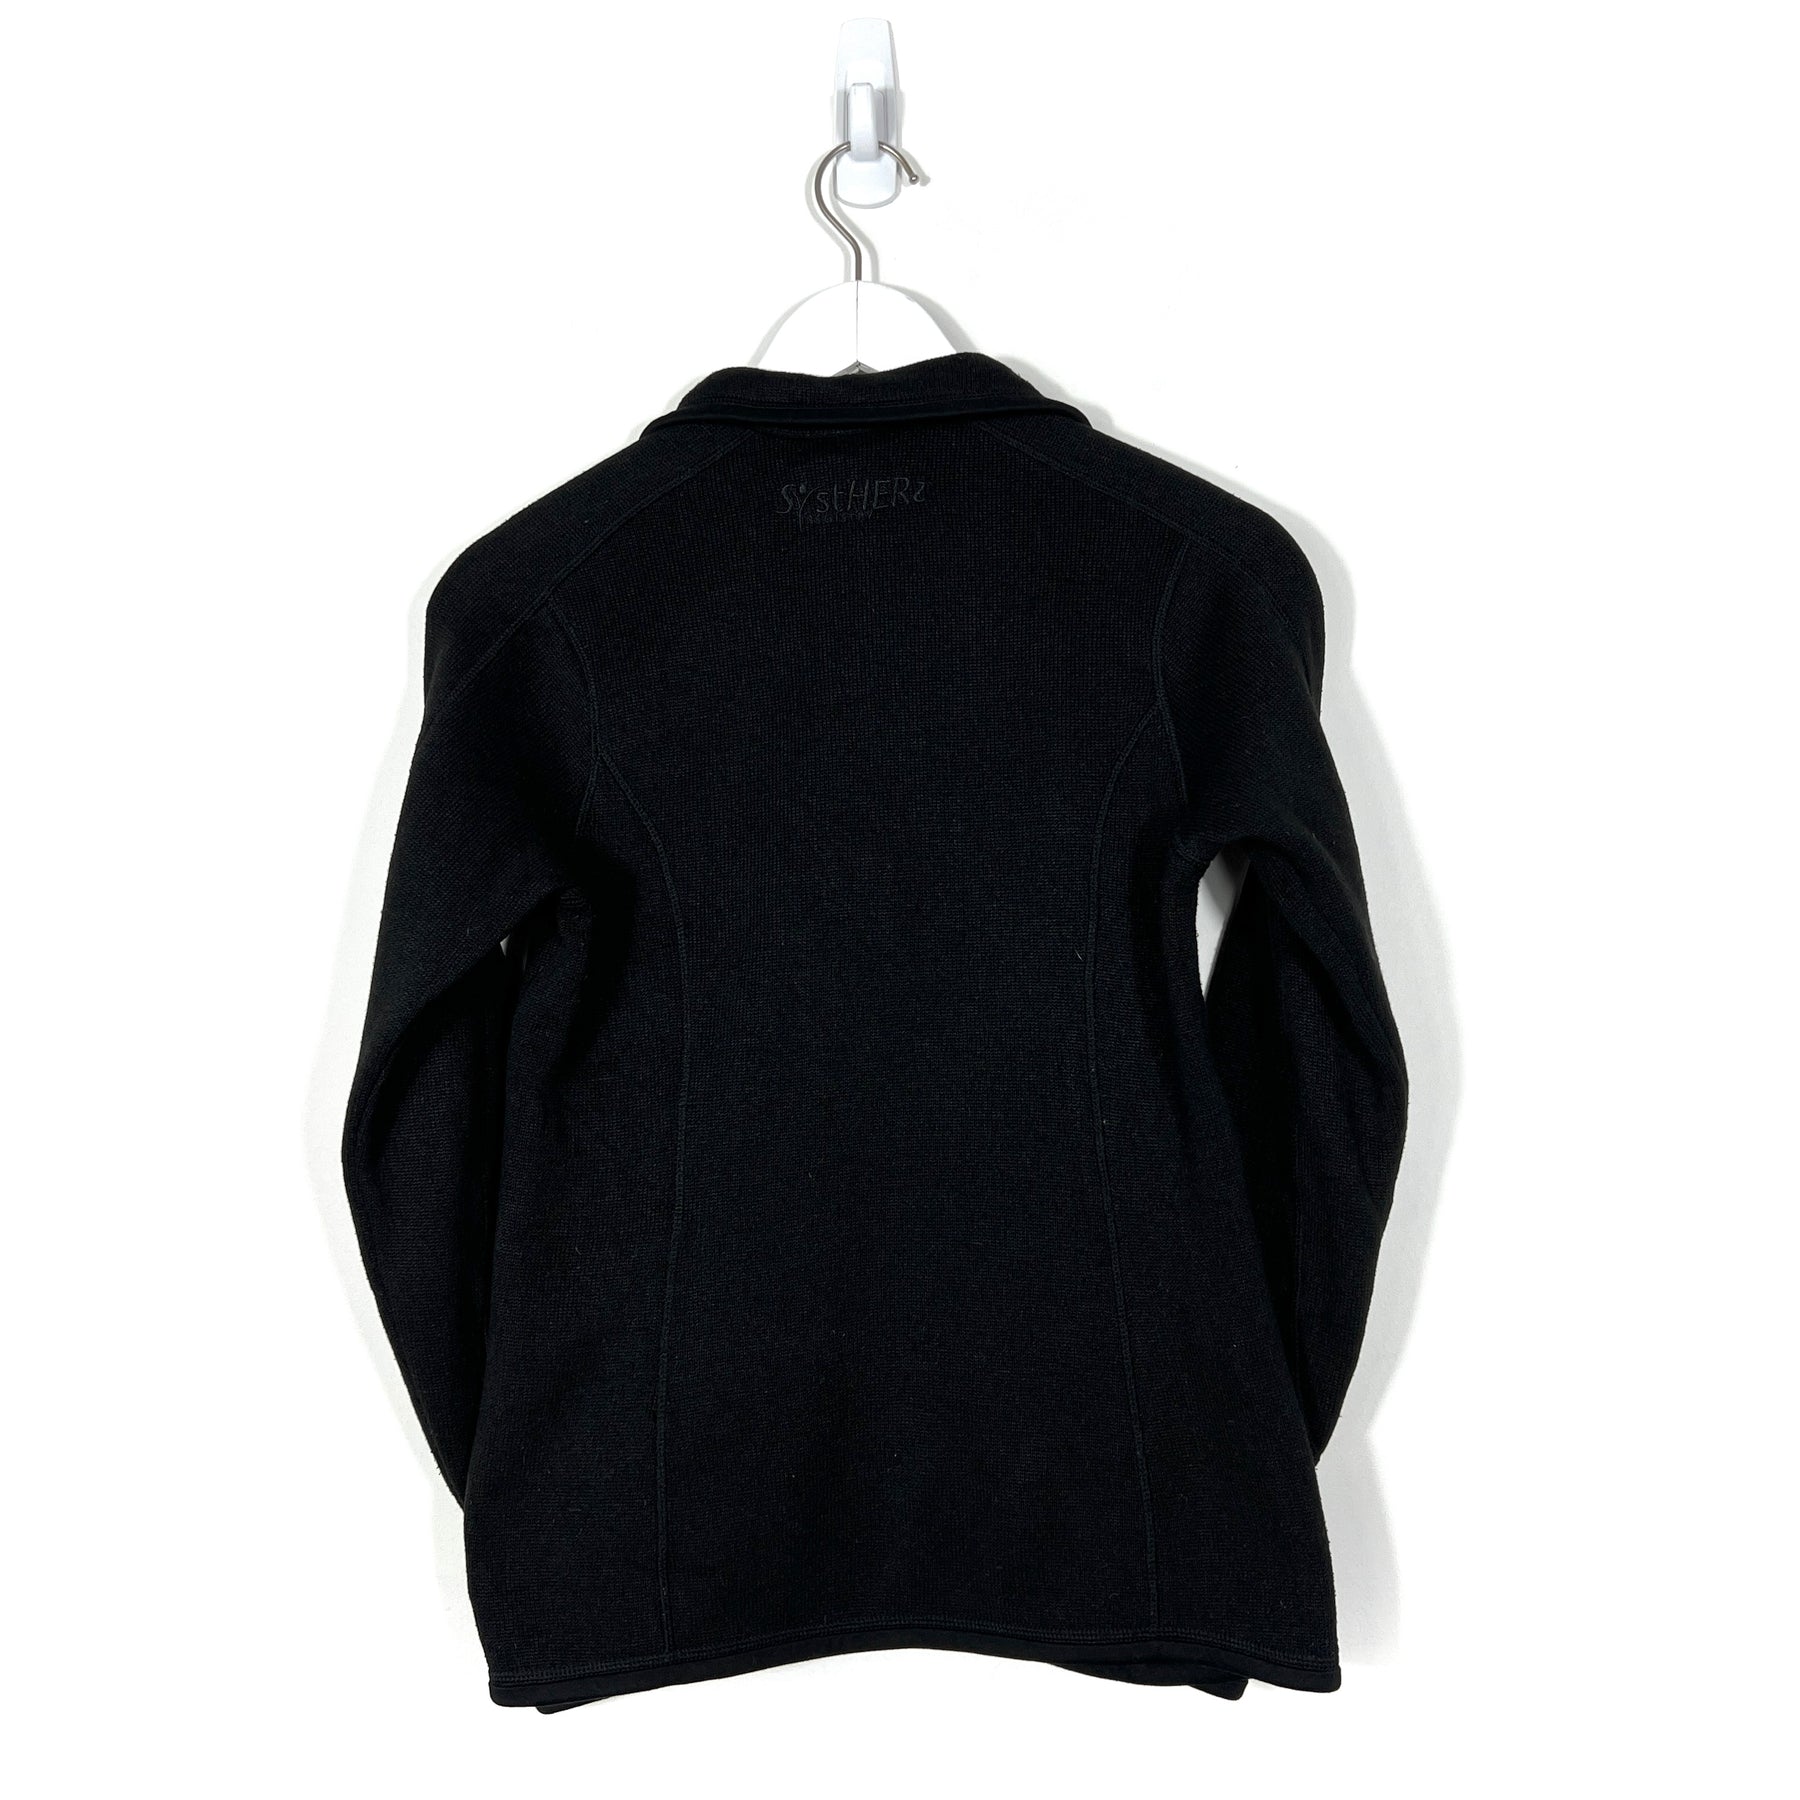 Vintage Patagonia 1/4 Zip Sweatshirt - Women's XS